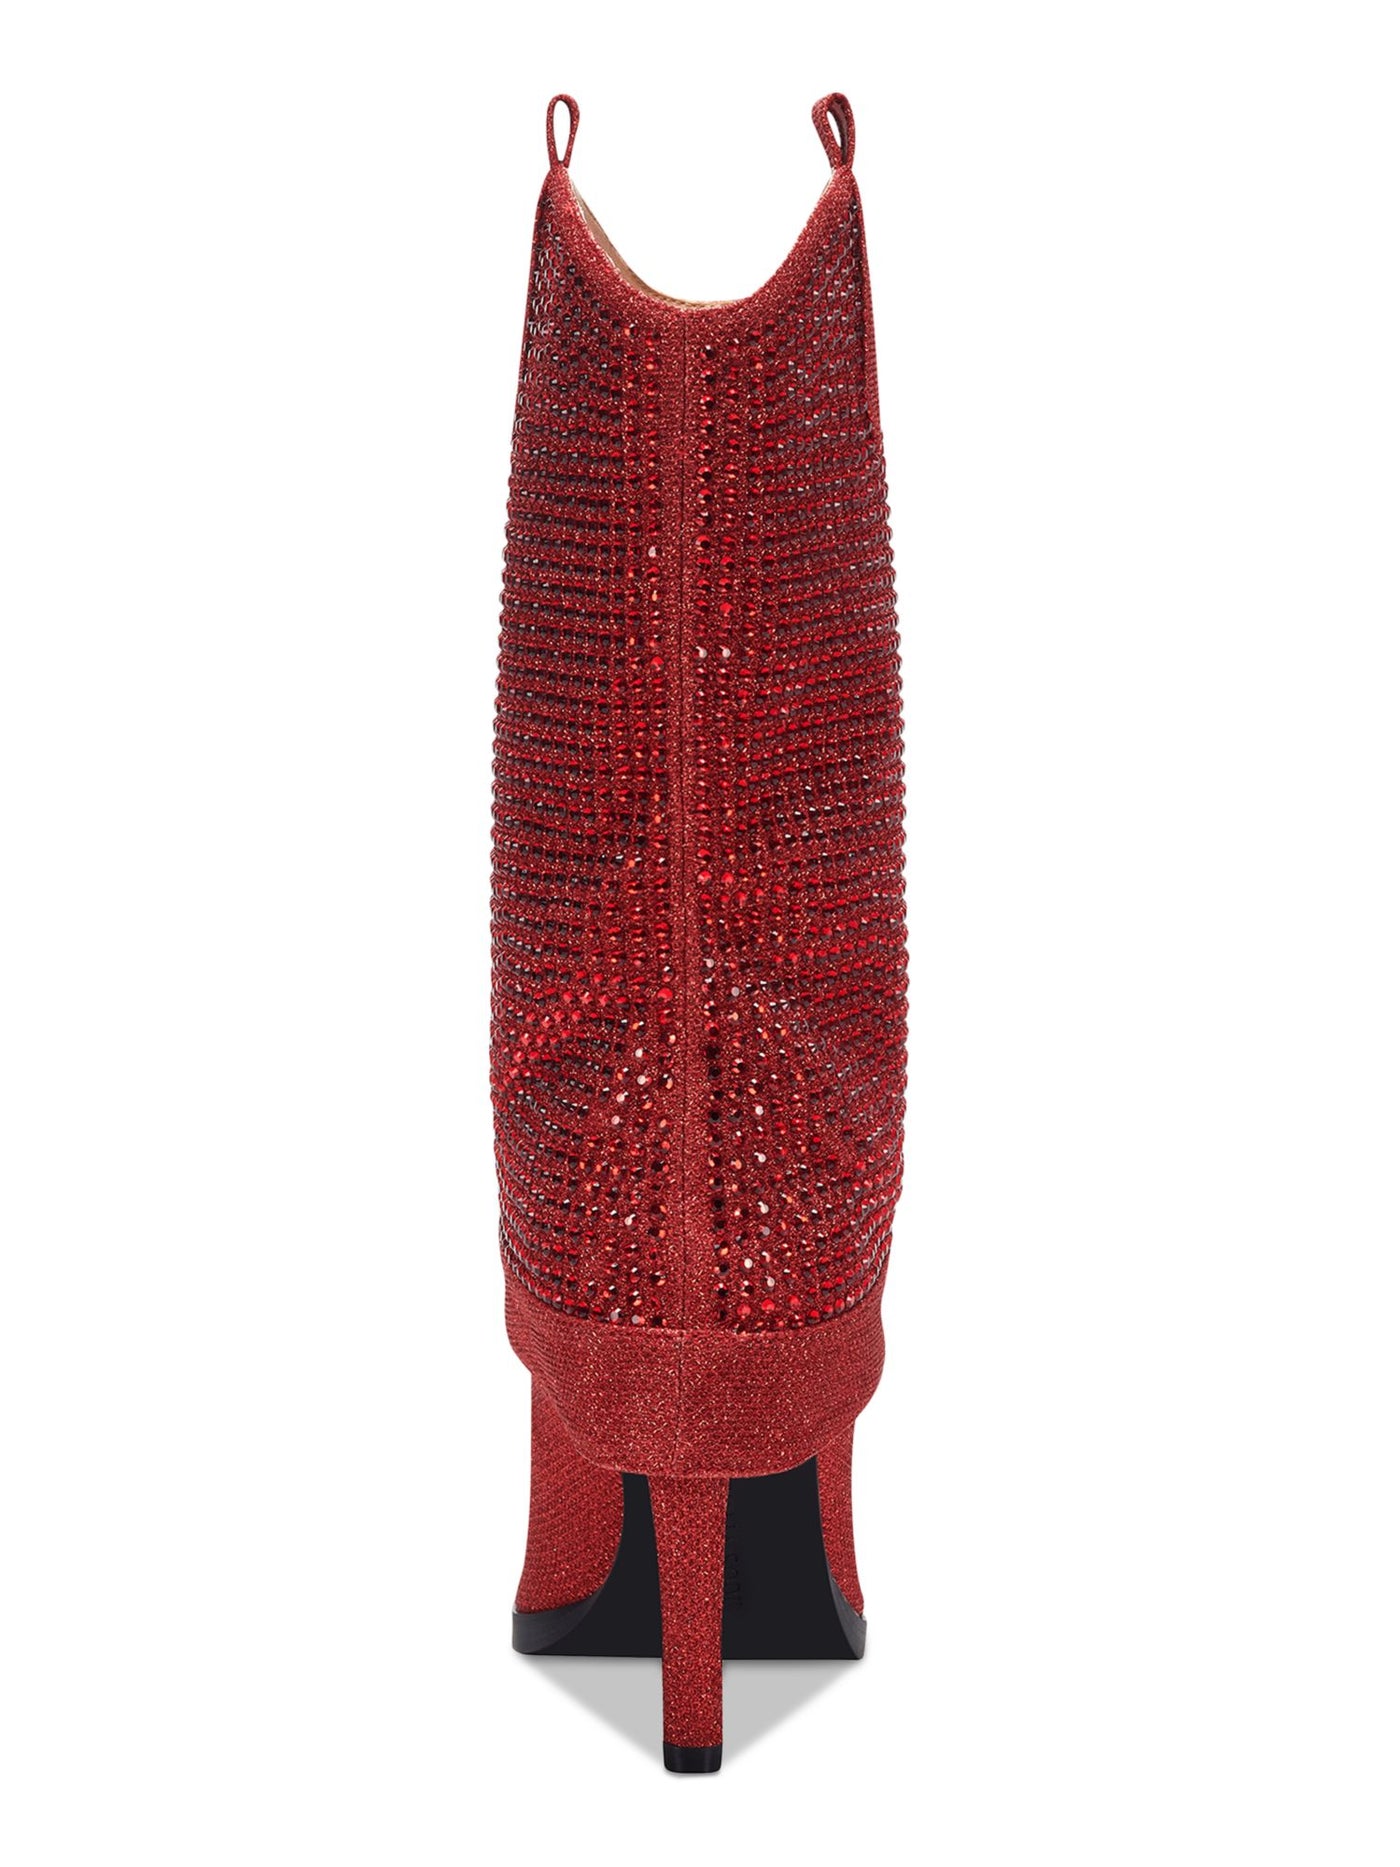 THALIA SODI Womens Red Rhinestone Nellie Pointed Toe Stiletto Dress Western Boot 8.5 M